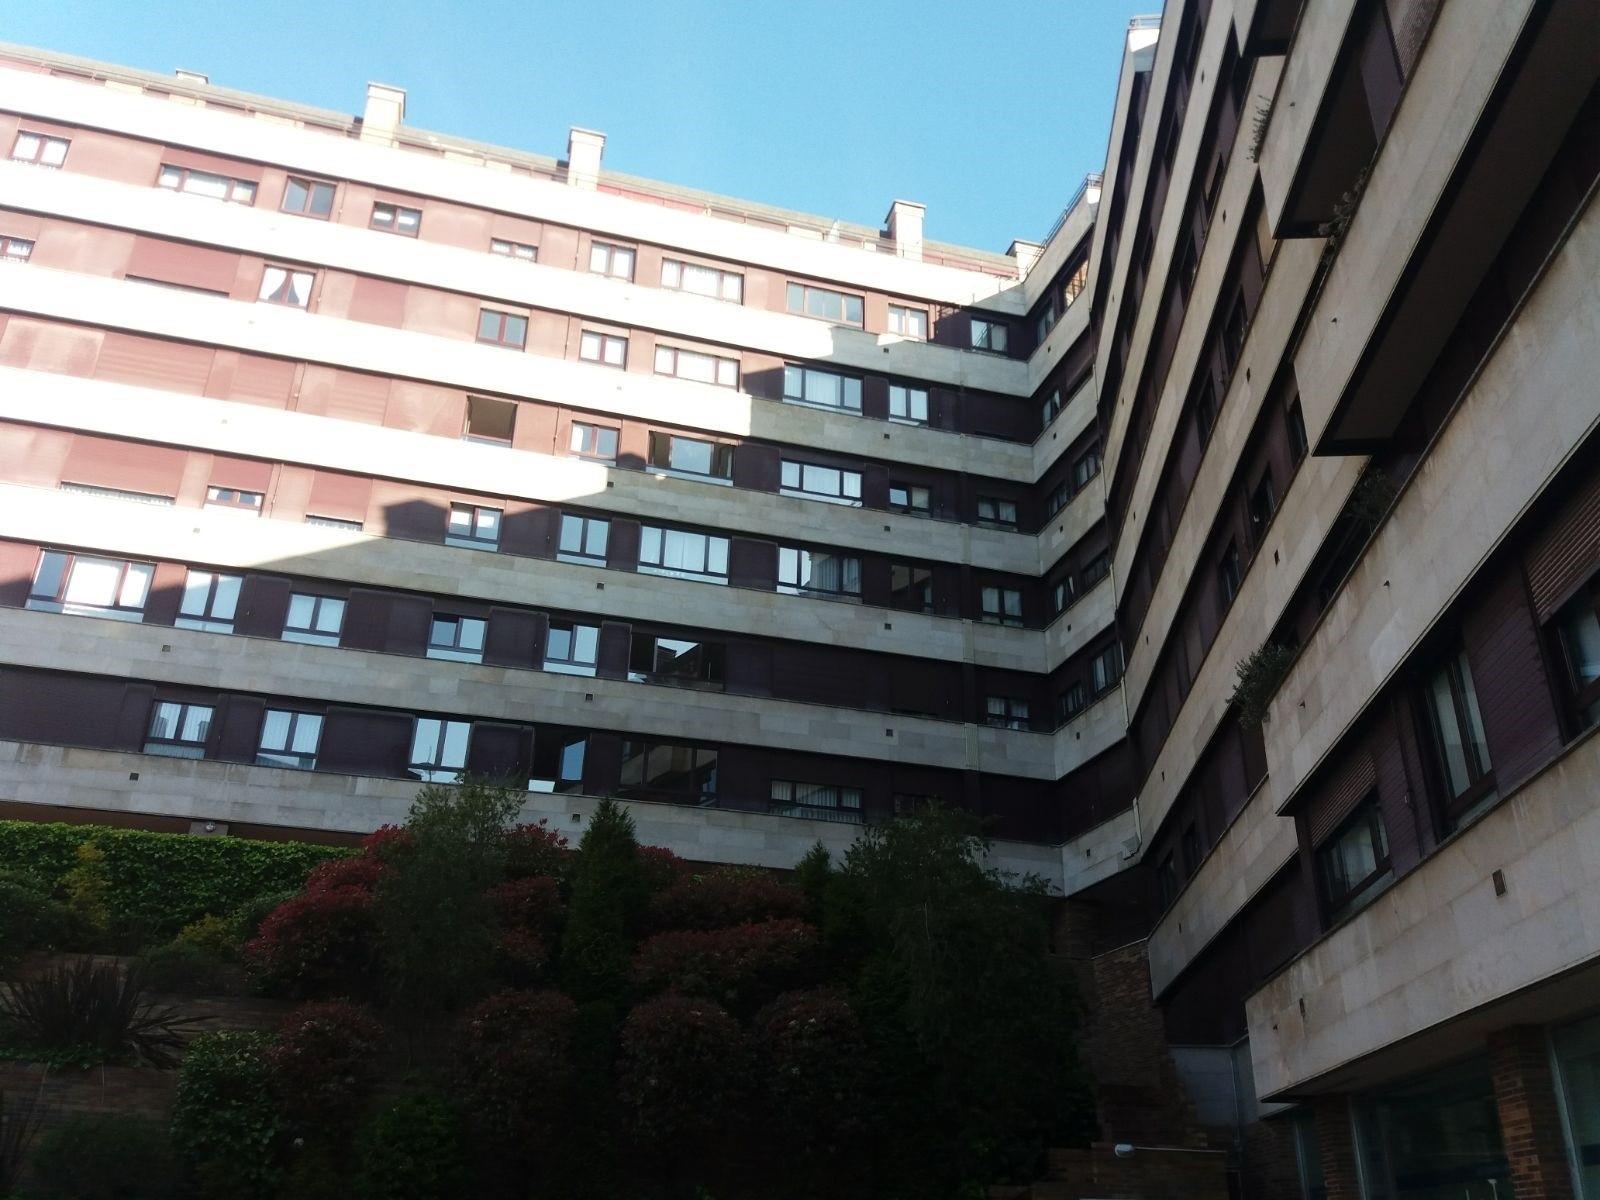 Bloque de viviendas en Oviedo (Asturias)